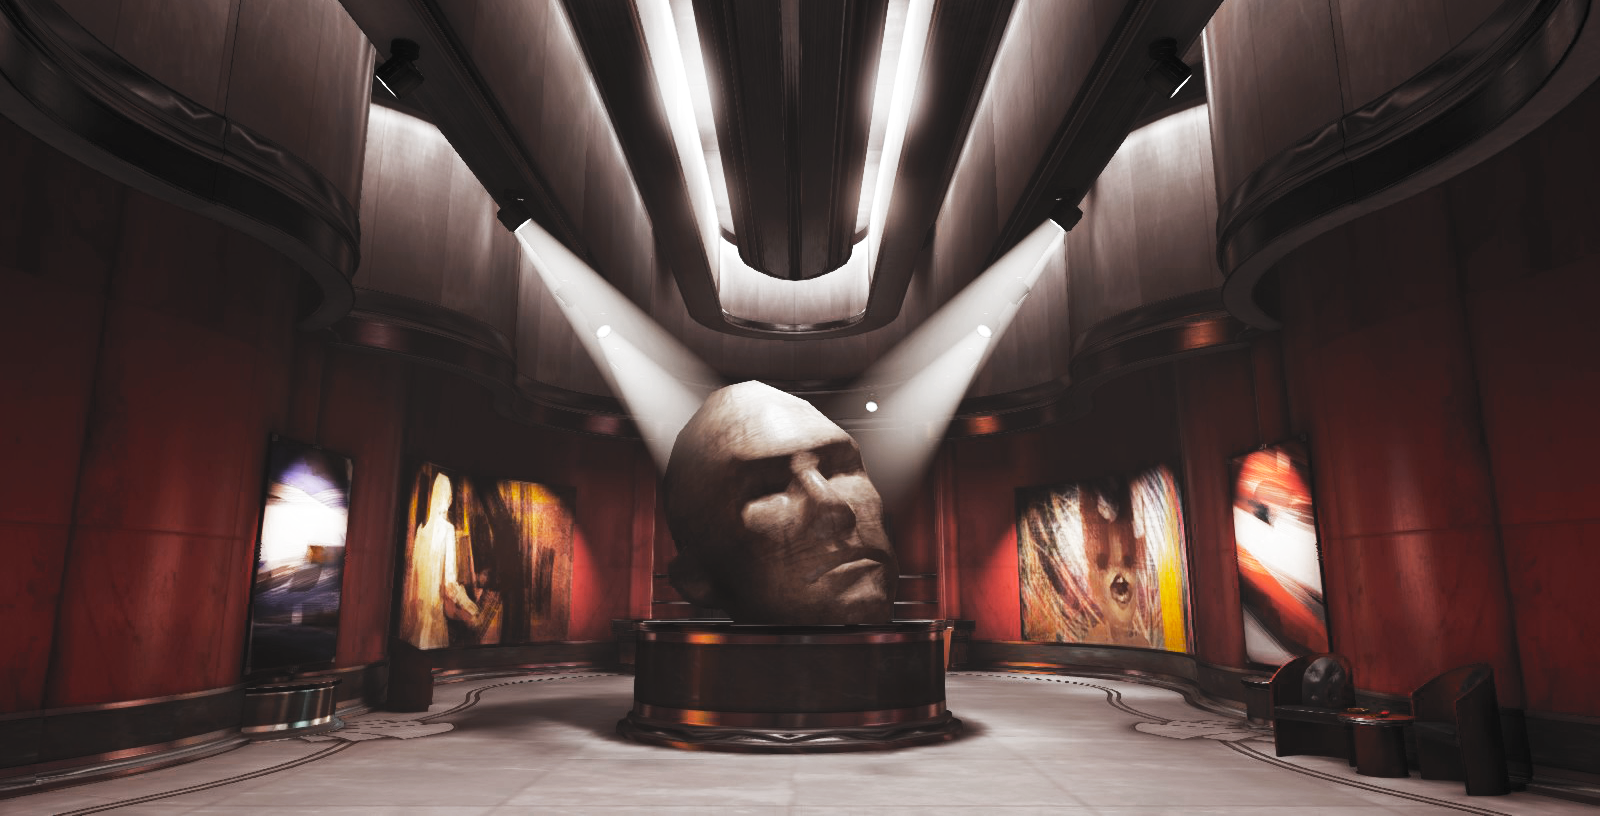 Bioshock Infinite: Burial At Sea Episode 1 - Hulking Reviewer